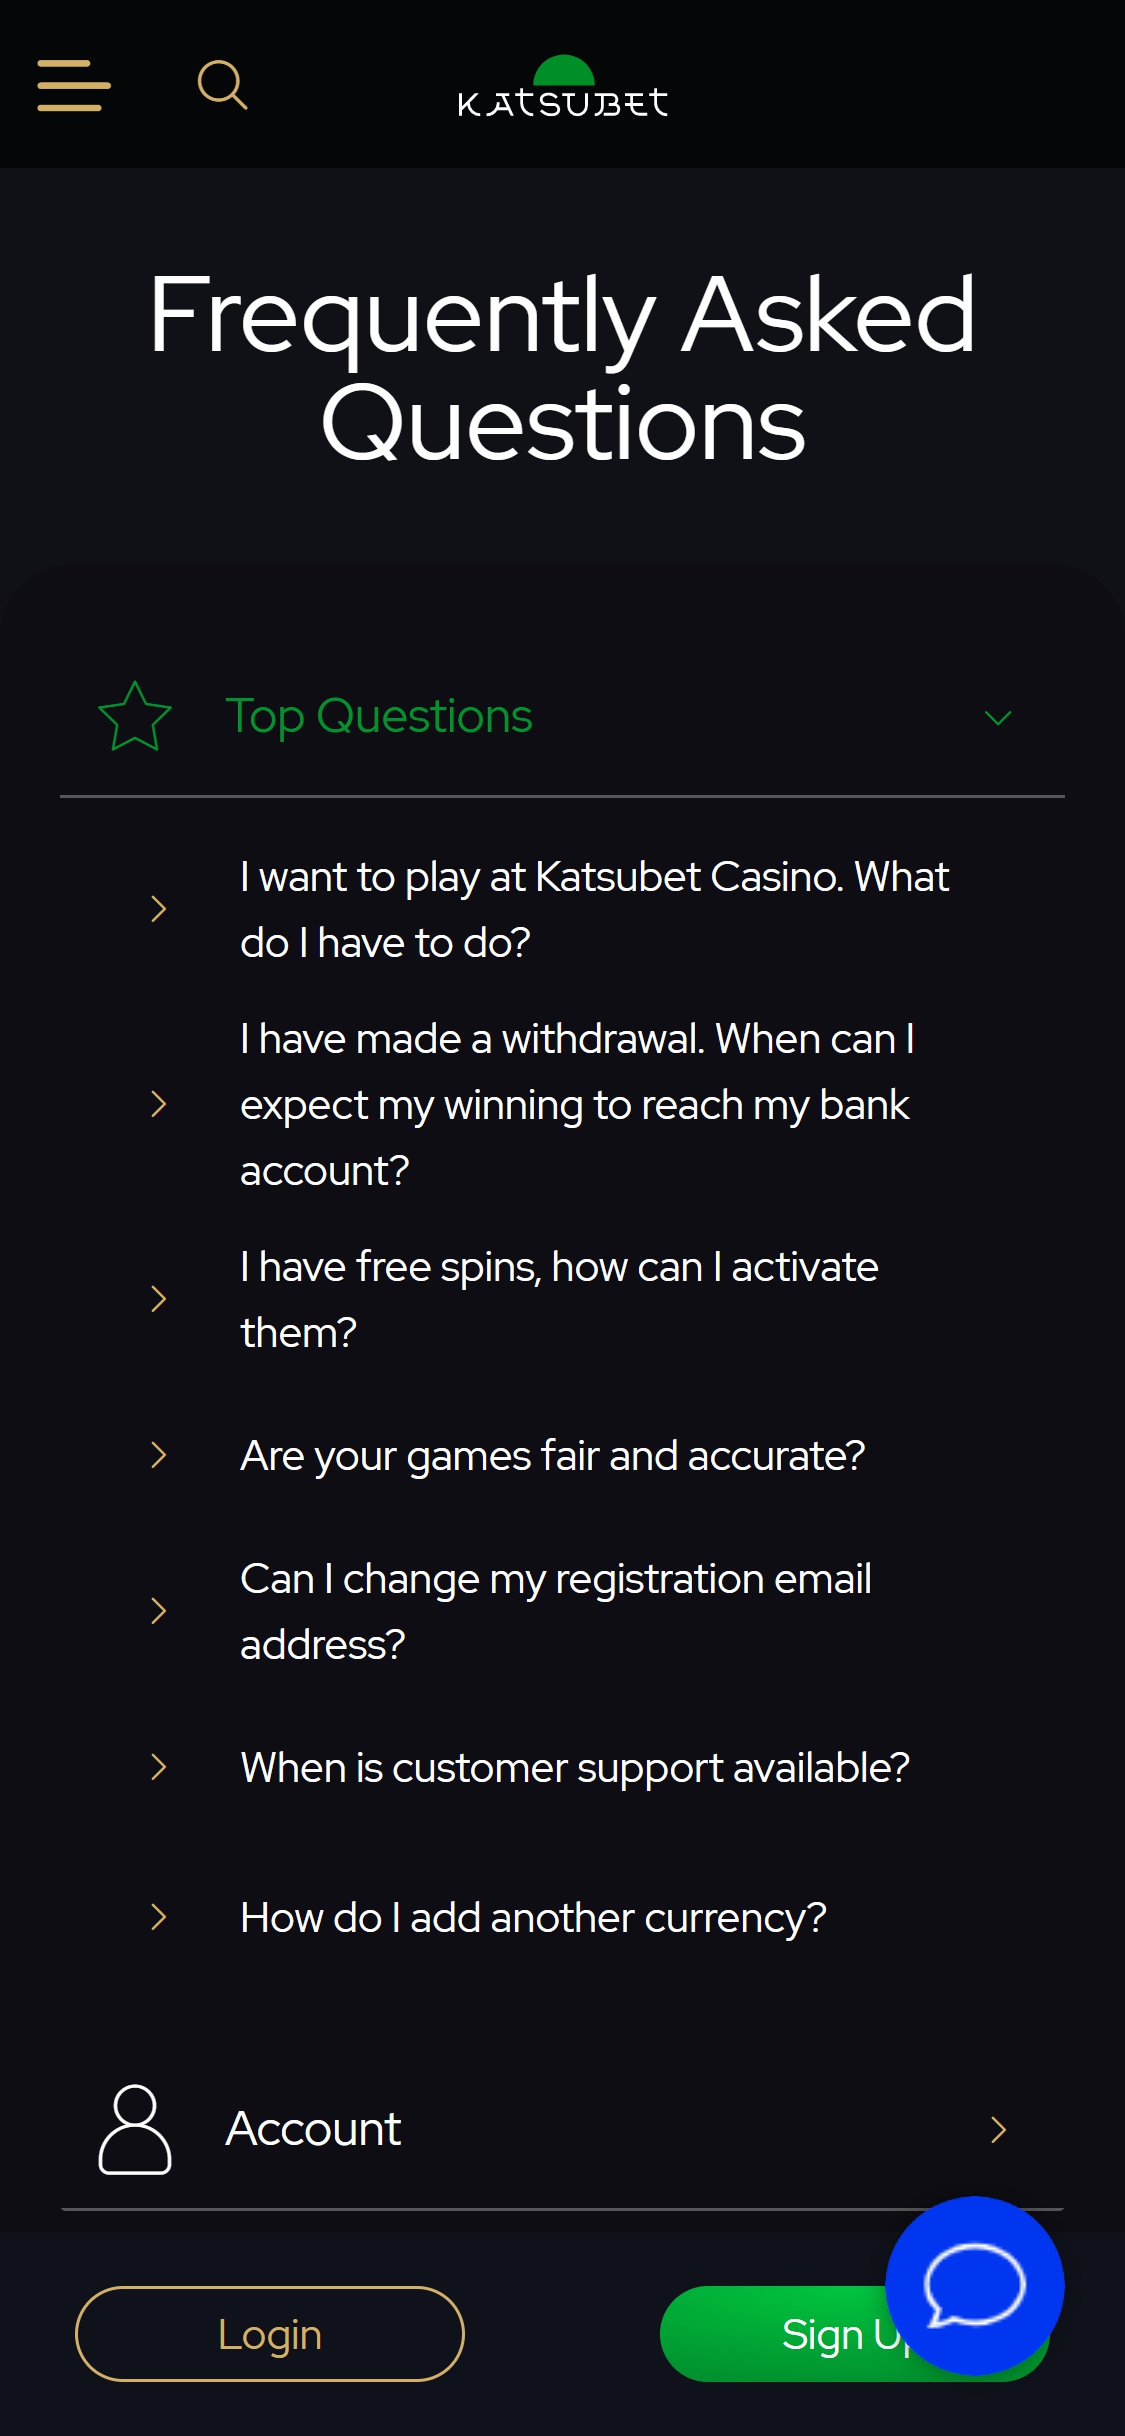 KatsuBet Mobile Live Dealer Games Review